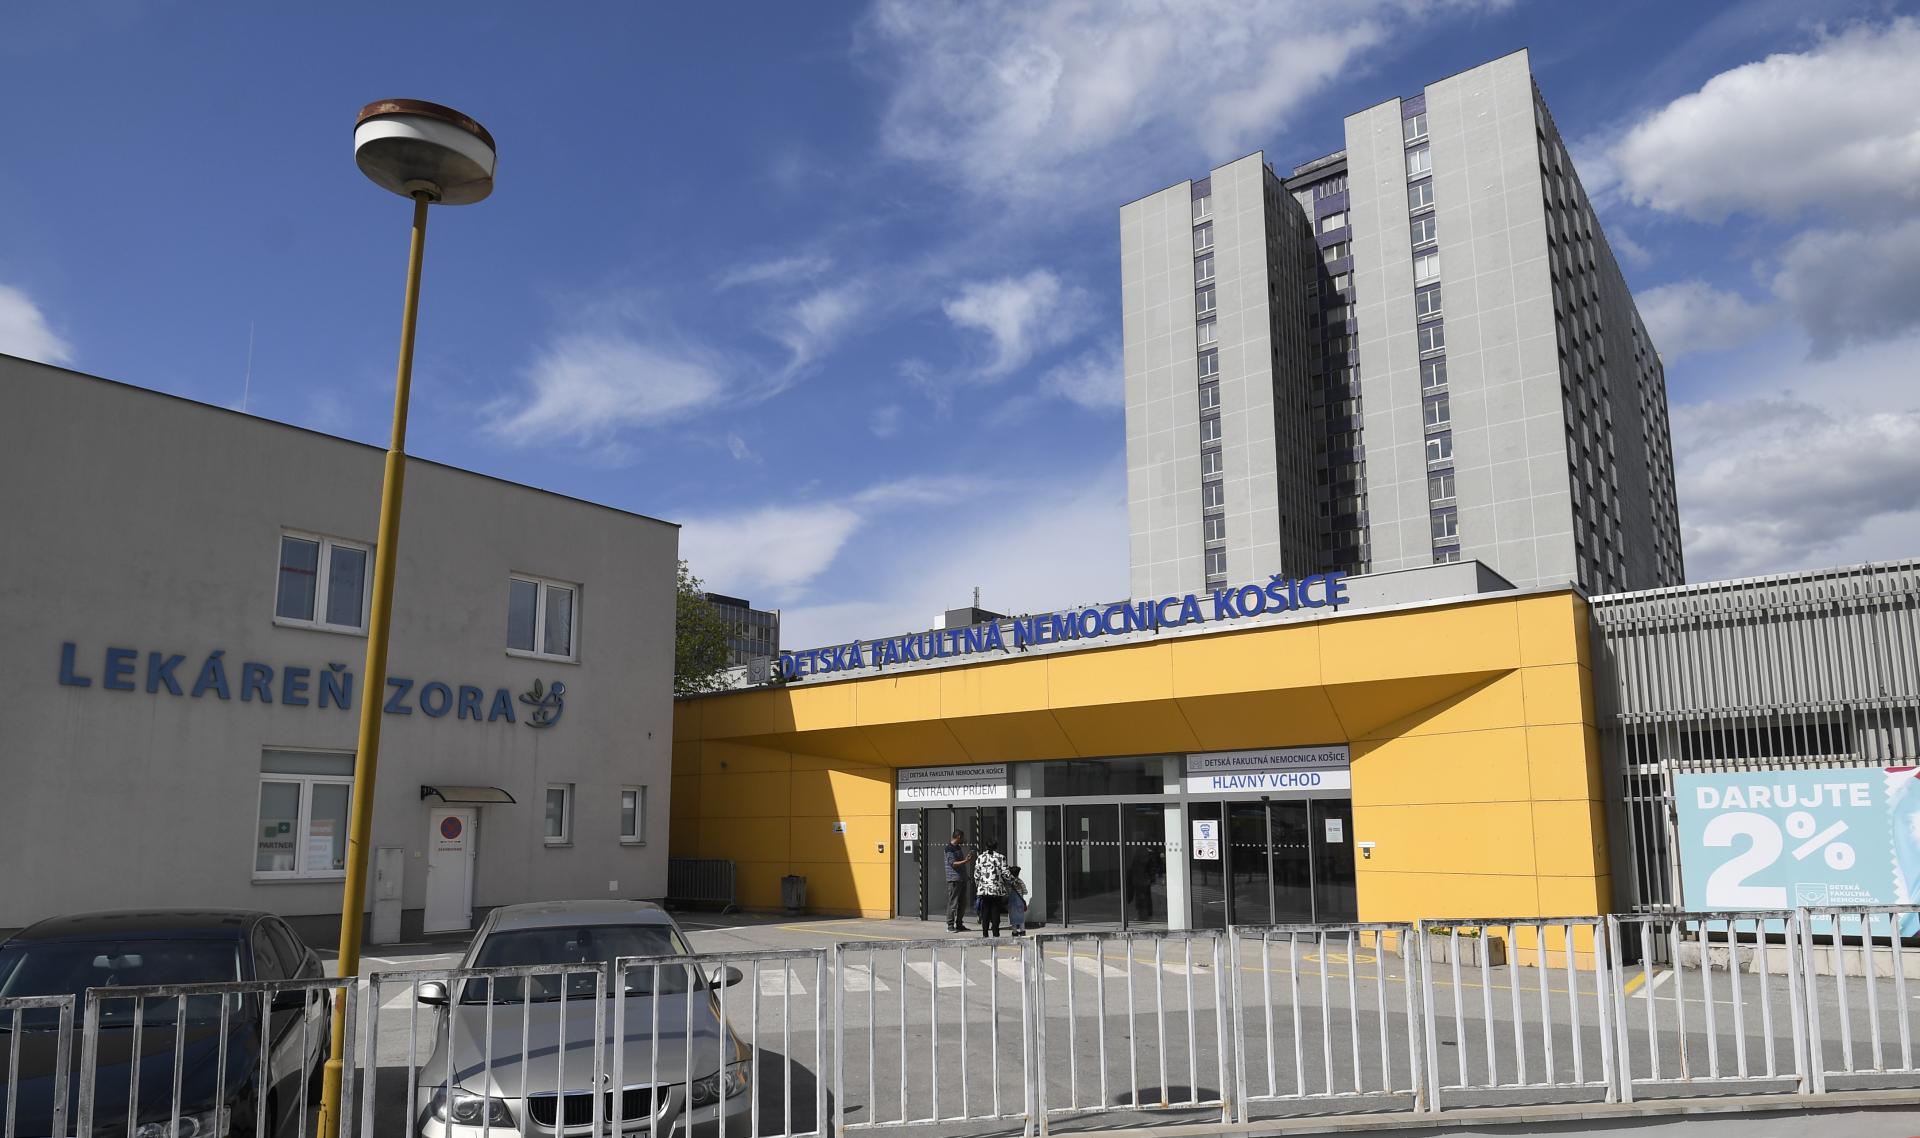 Detská fakulntná nemocnica Košice víta vládou schválenú nadstavbu. Hotová má byť do roku 2028